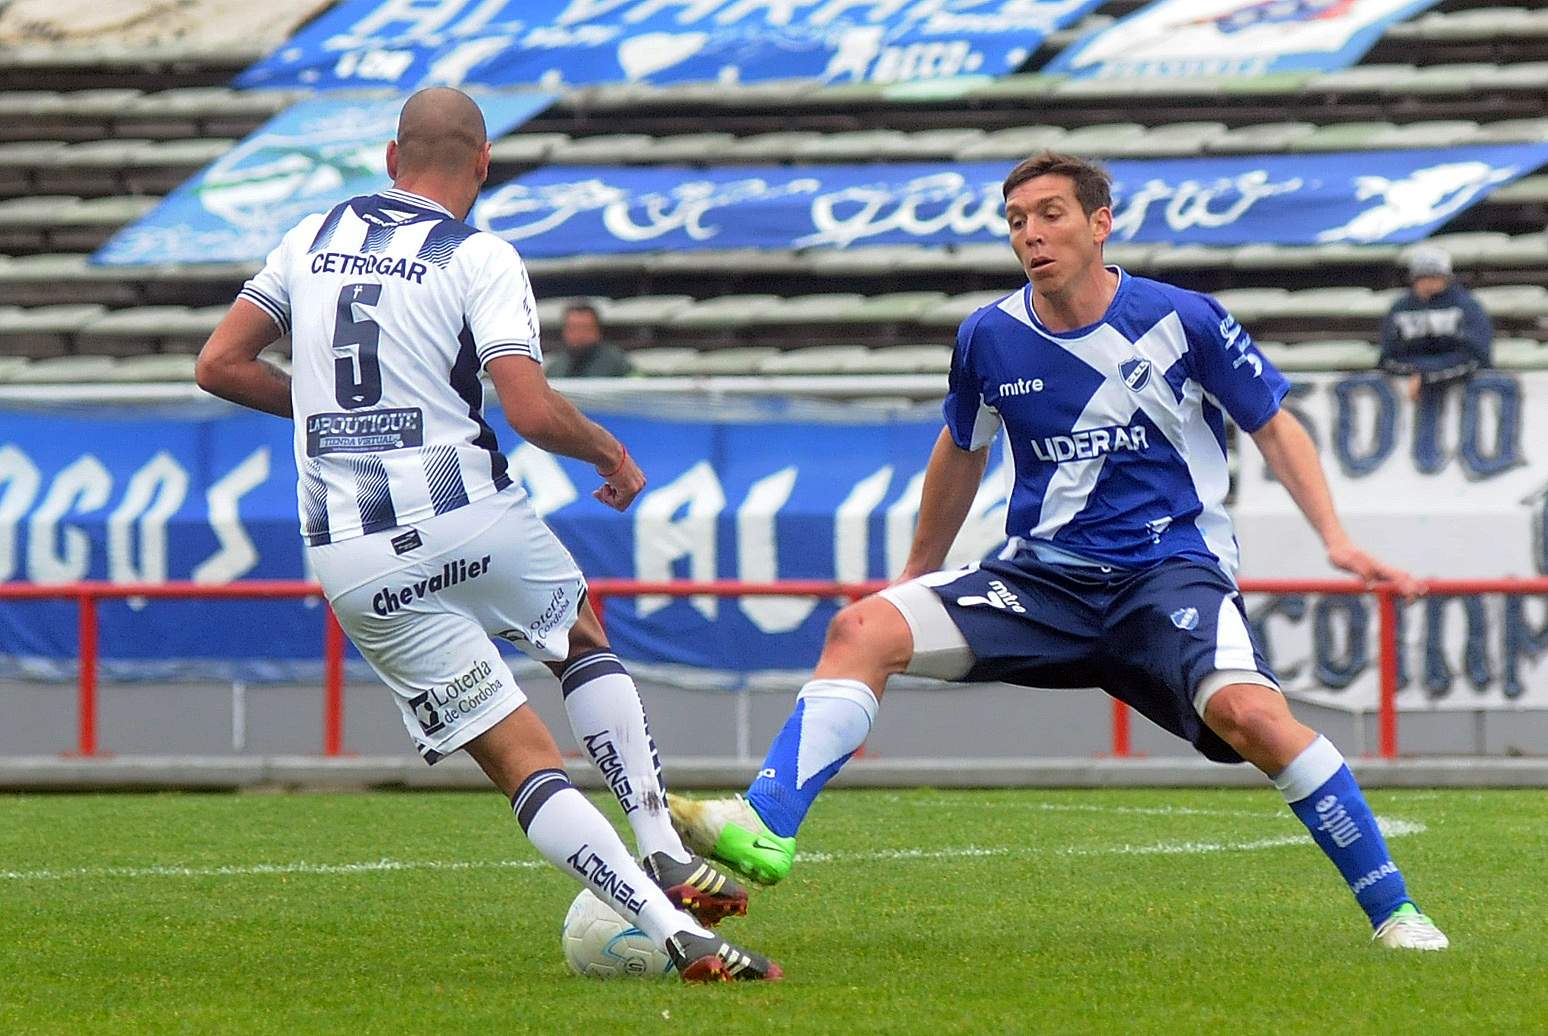 Tántera marca a un jugador de Talleres de Córdoba. Fue el décimo sin ganar de esa serie de 17.